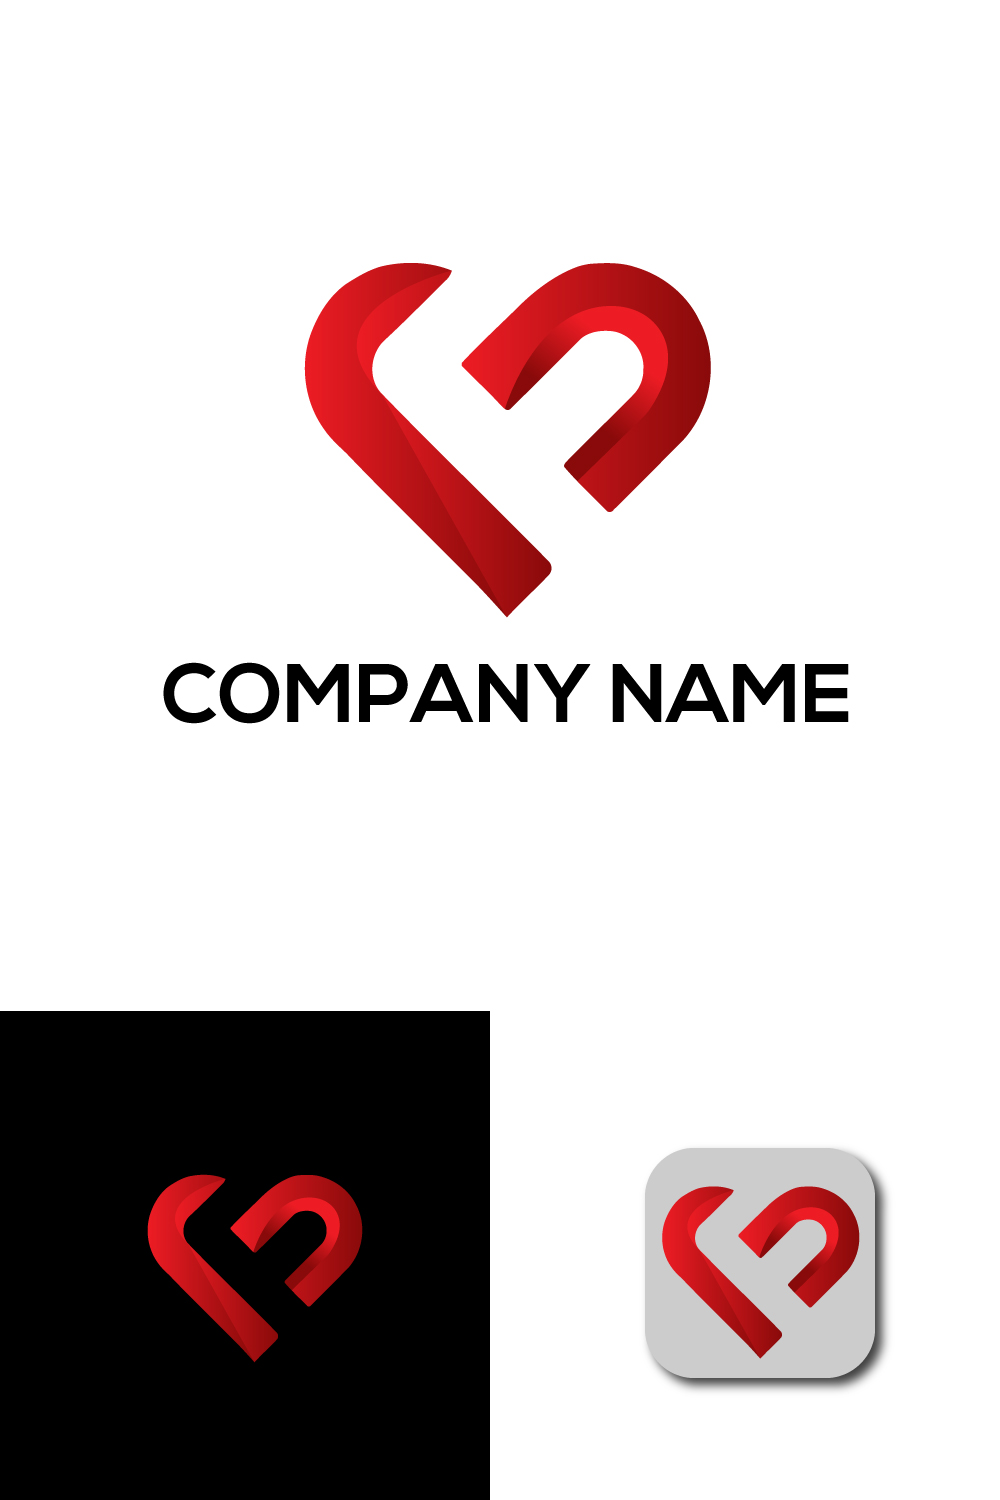 F Love Logo, F Heart Logo F logo, F Love and heart design, F Love pinterest preview image.